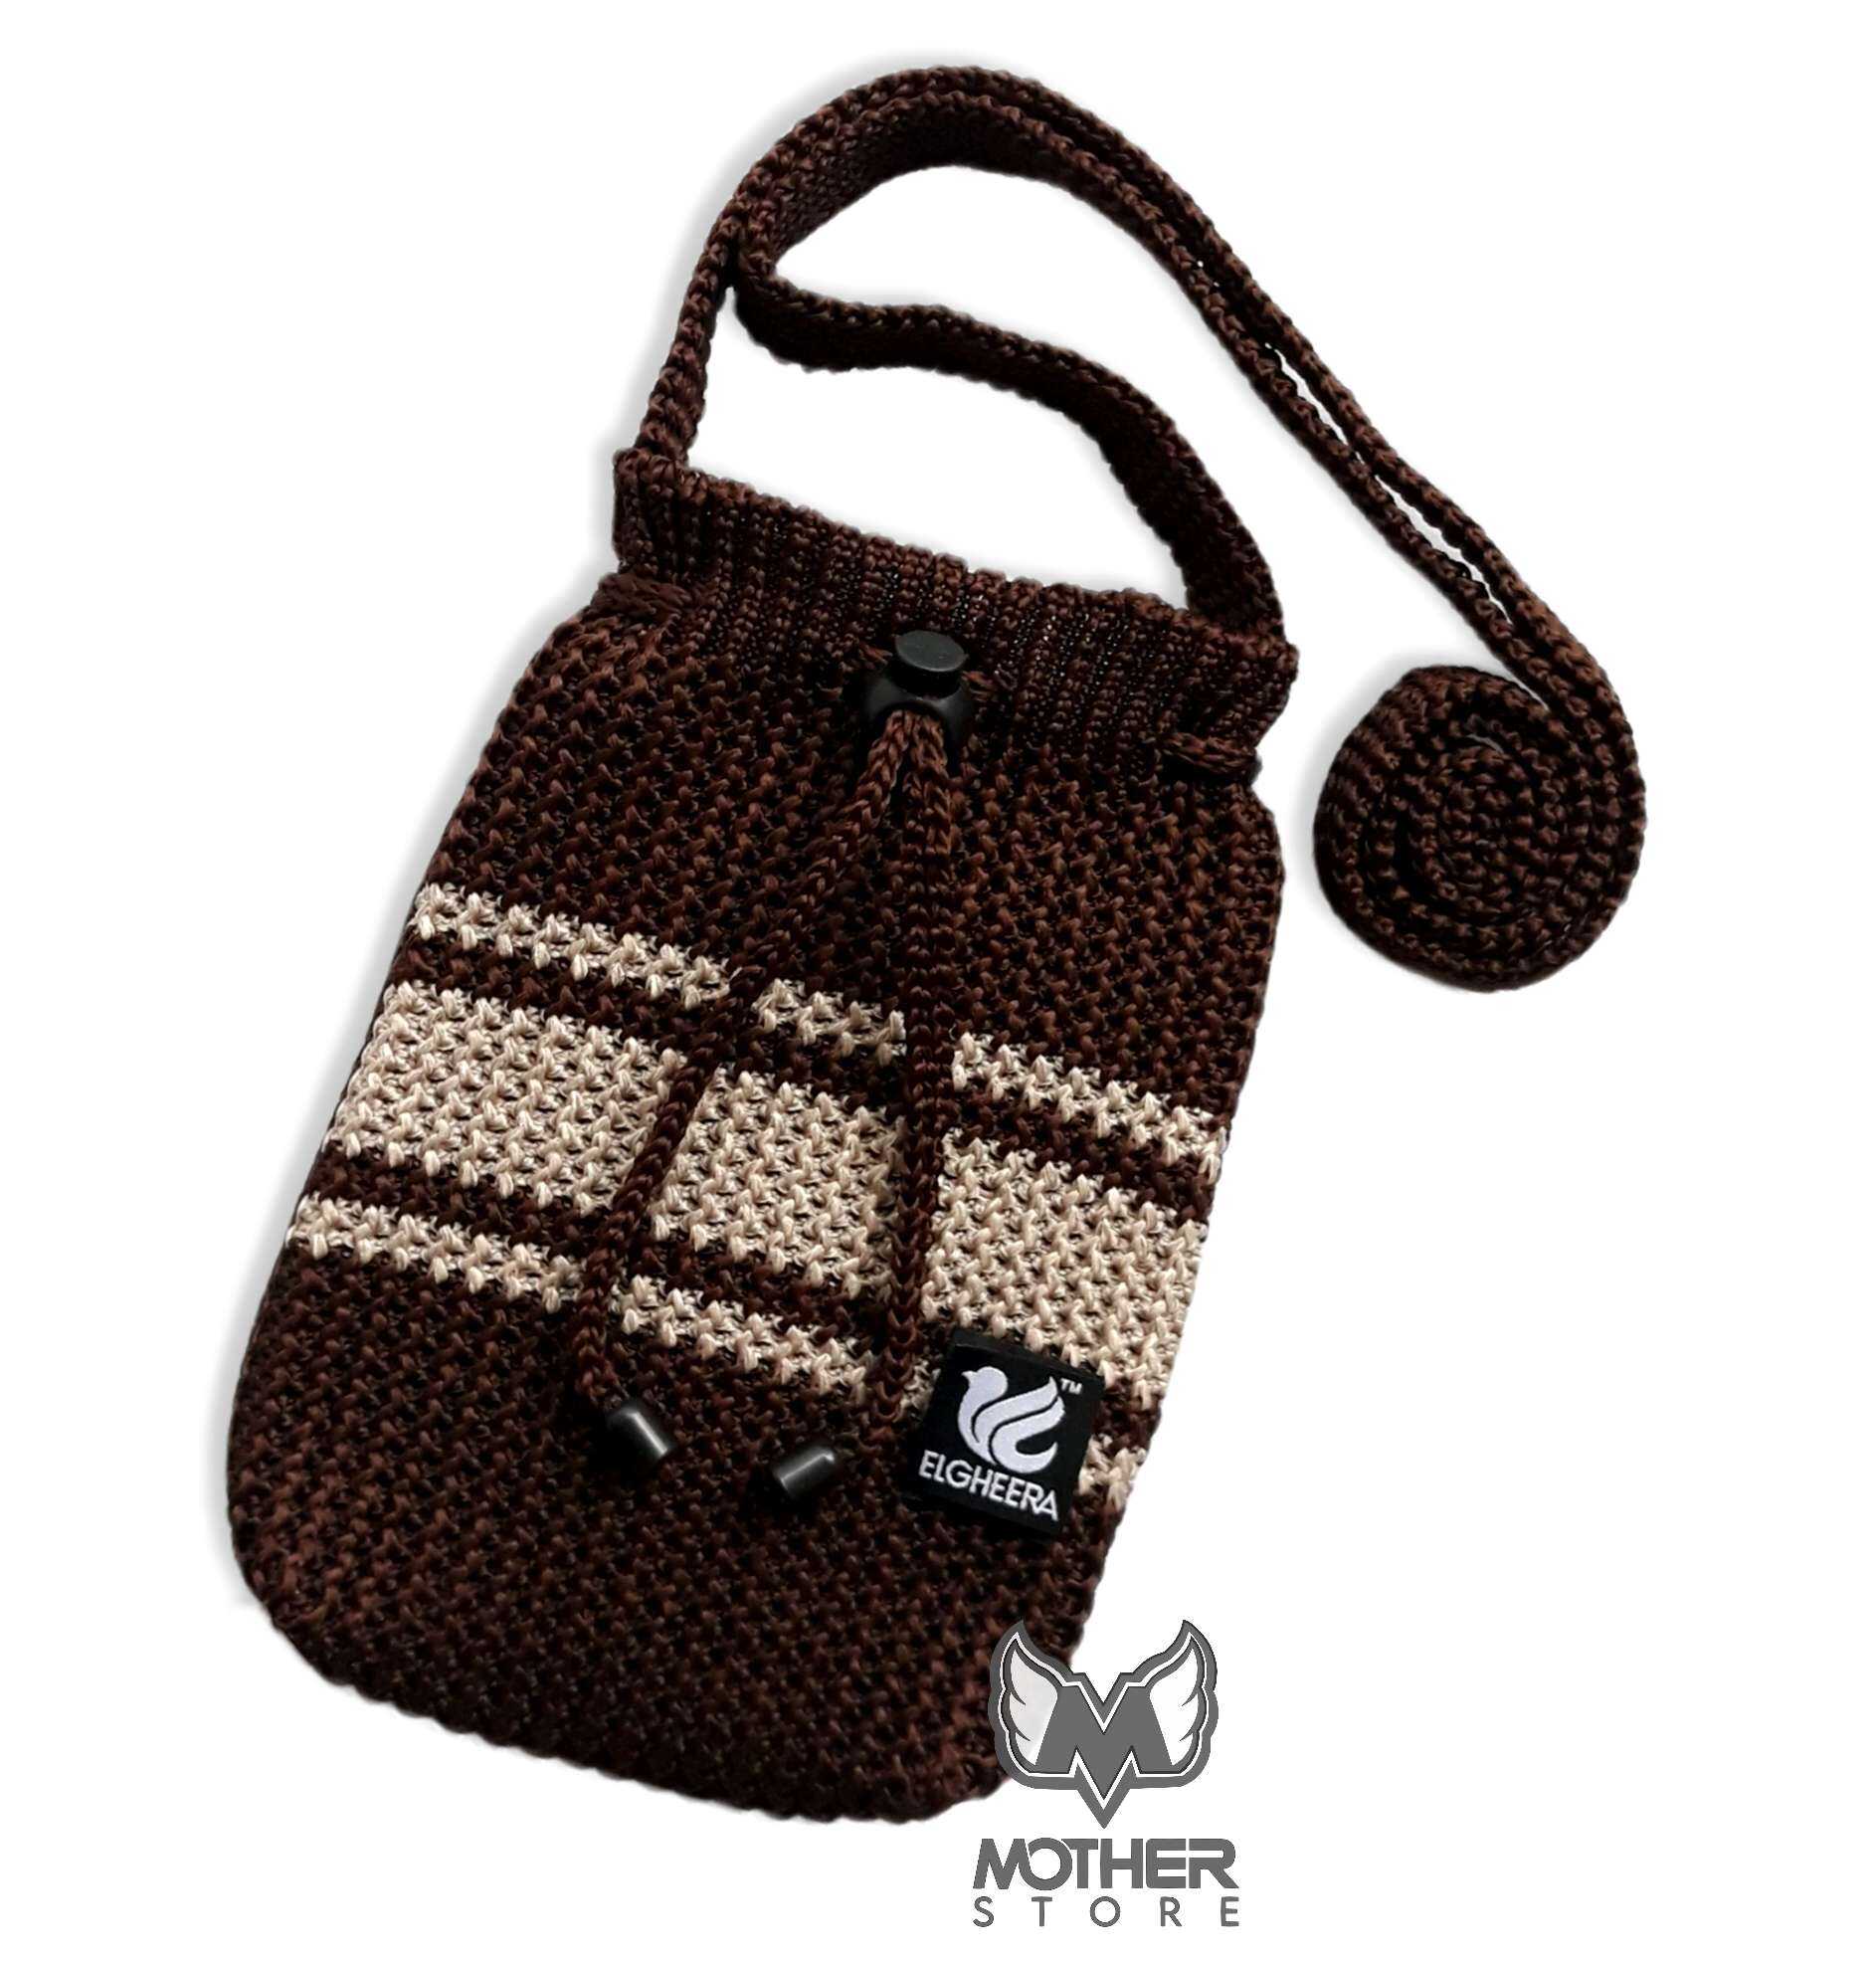 Buy Evolv KNIT CHALK BAG, Sherpa online now 